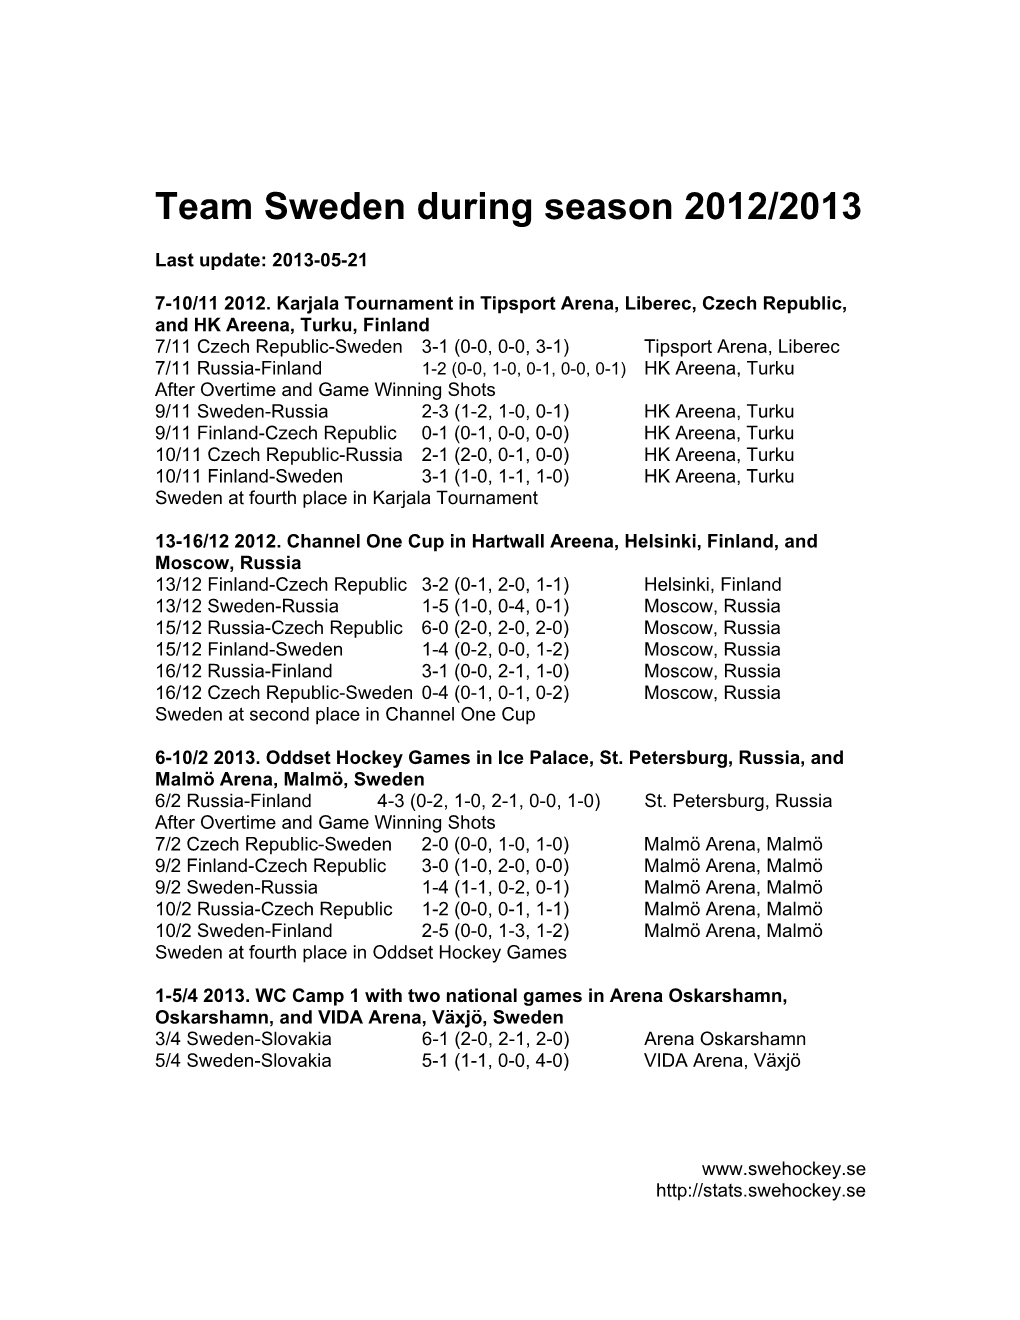 Team Sweden During Season 2012/2013